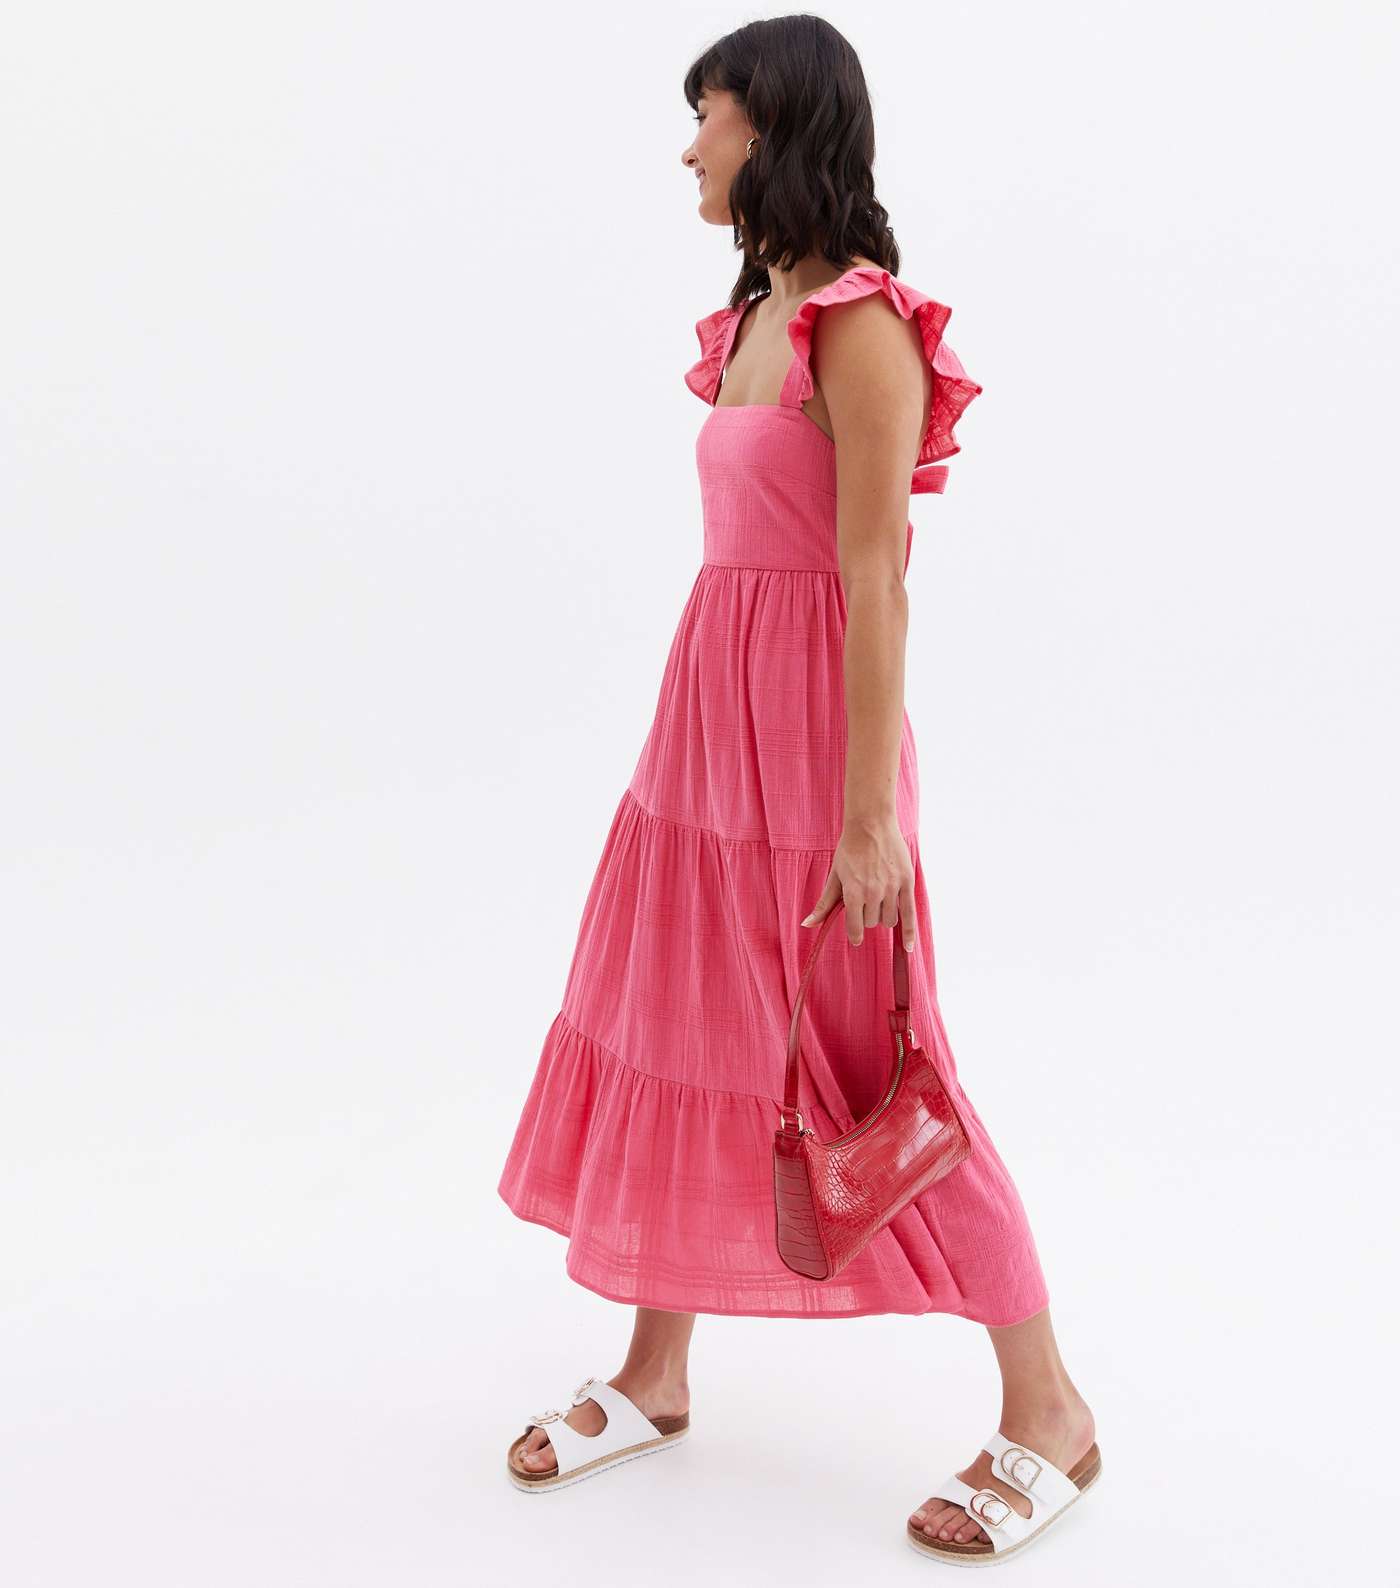 Bright Pink Frill Square Neck Tiered Midi Dress